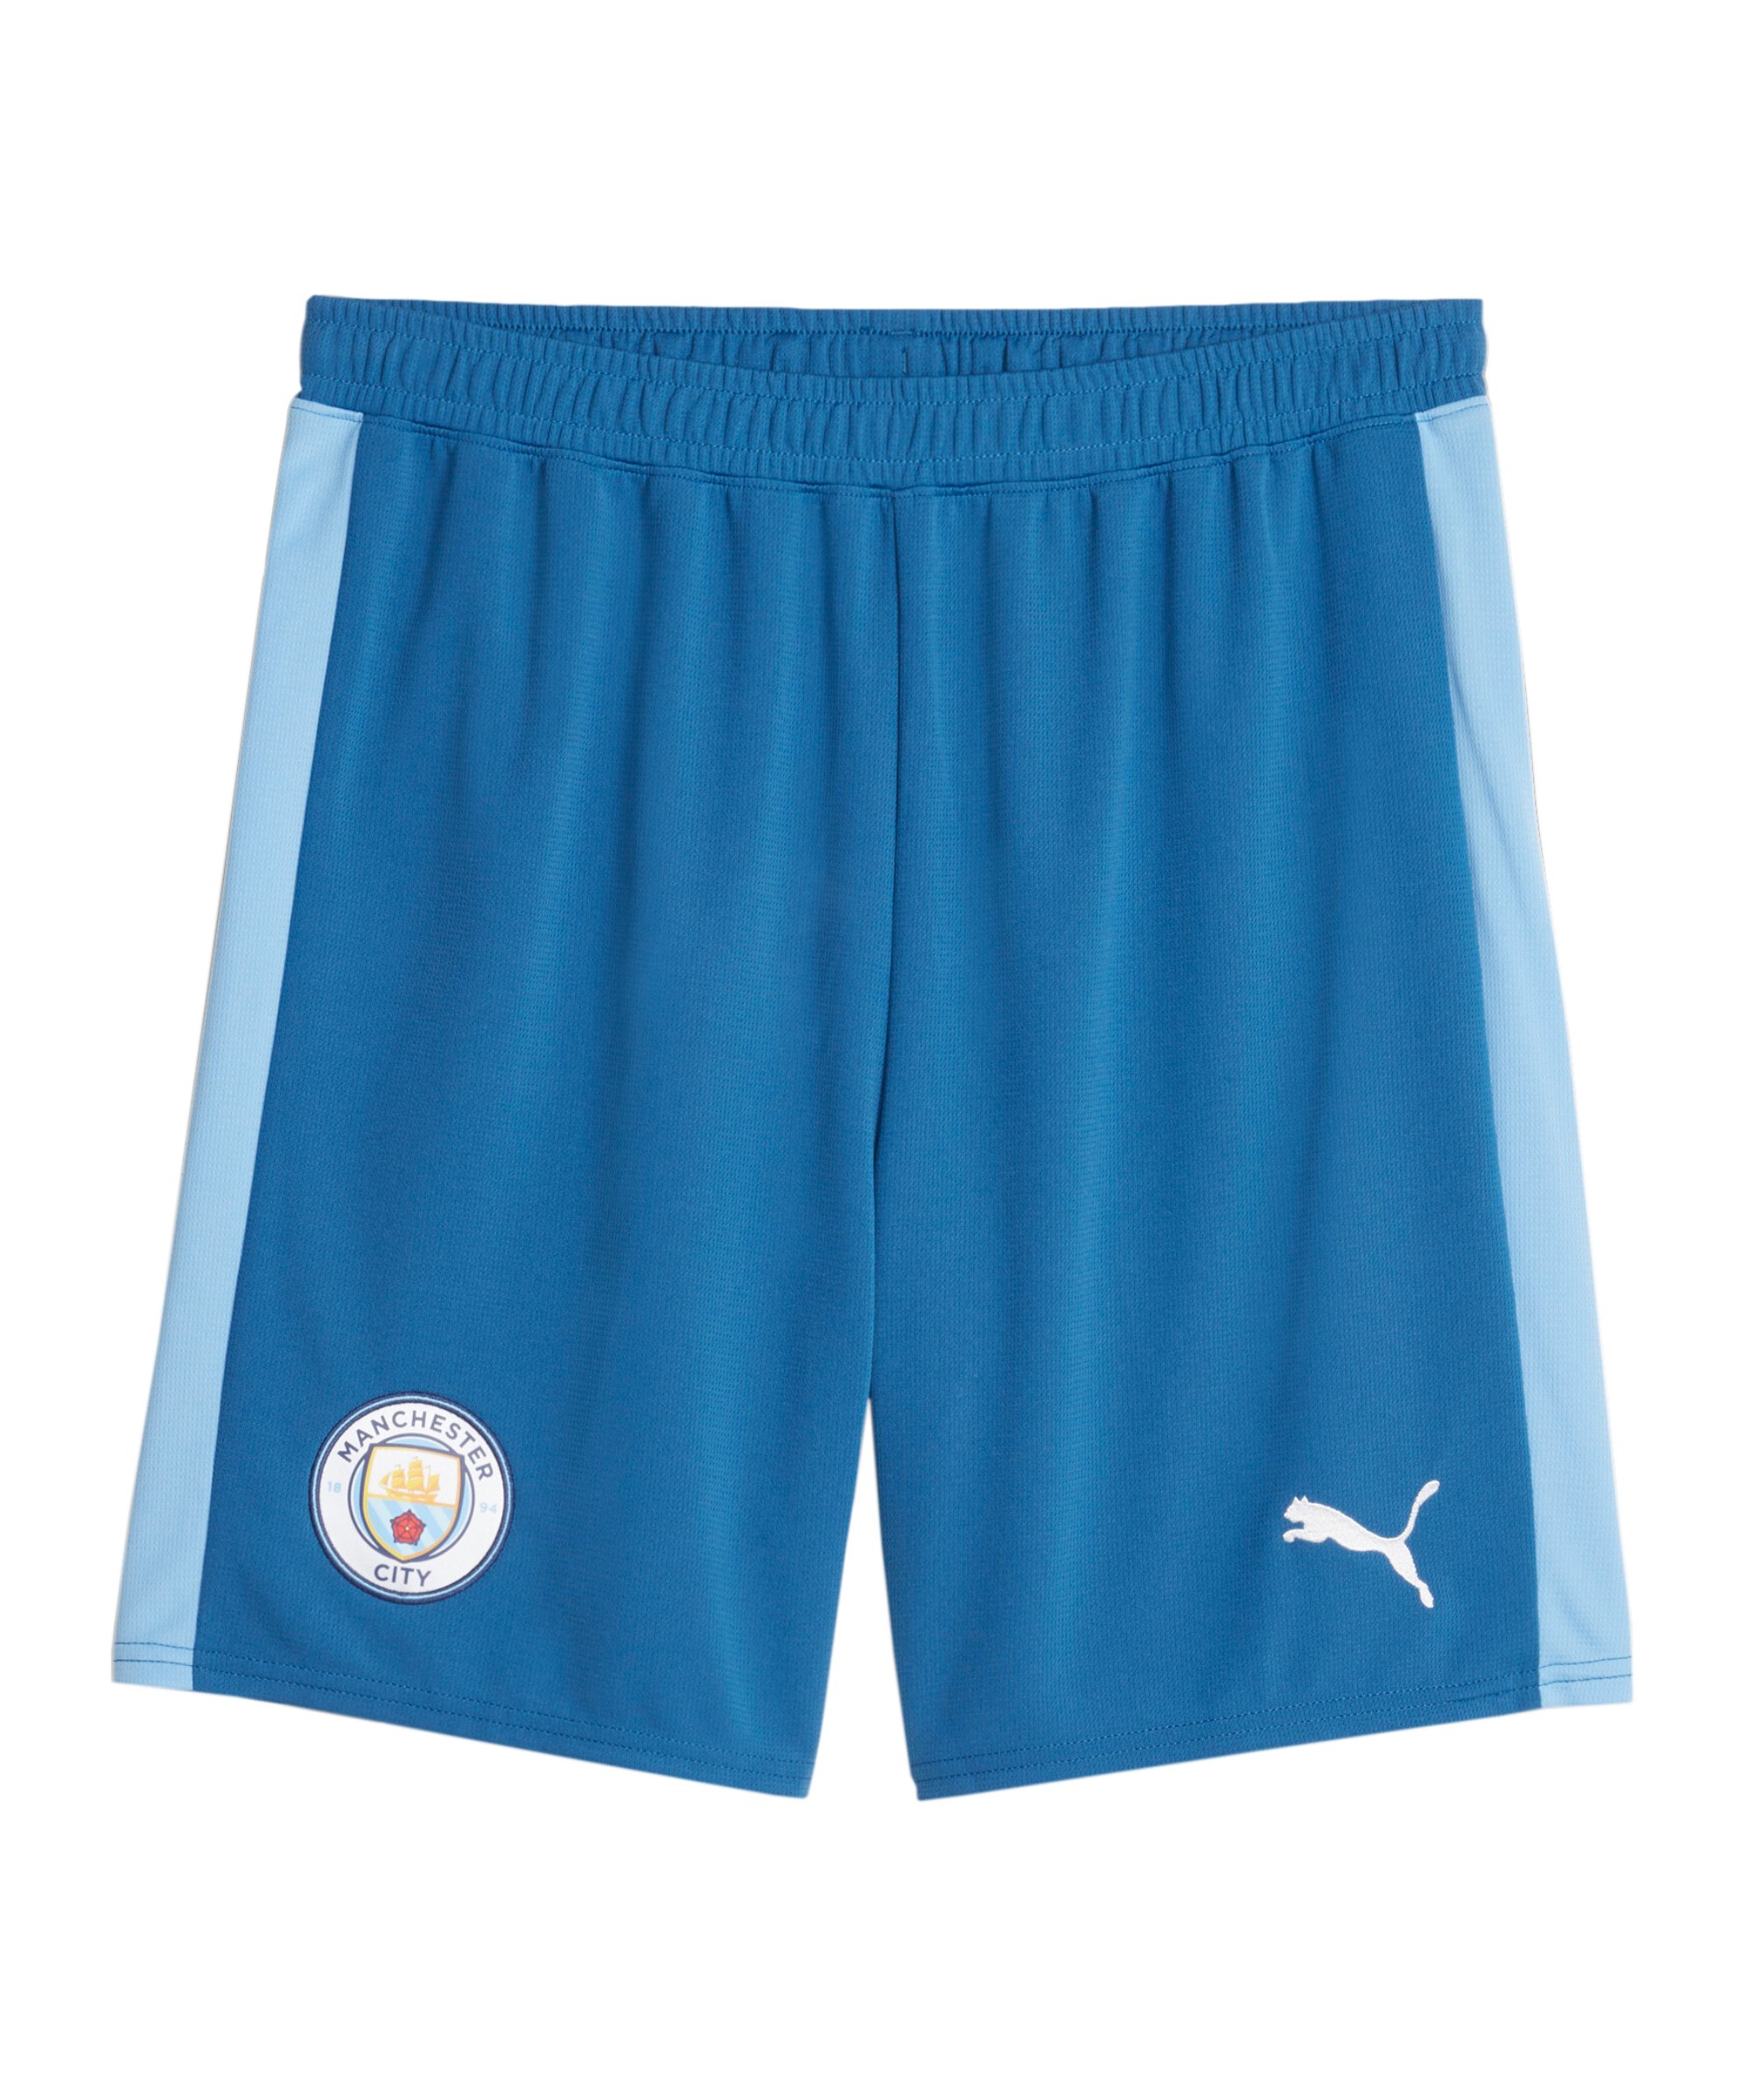 PUMA Manchester City CB Short Blau F06 - blau